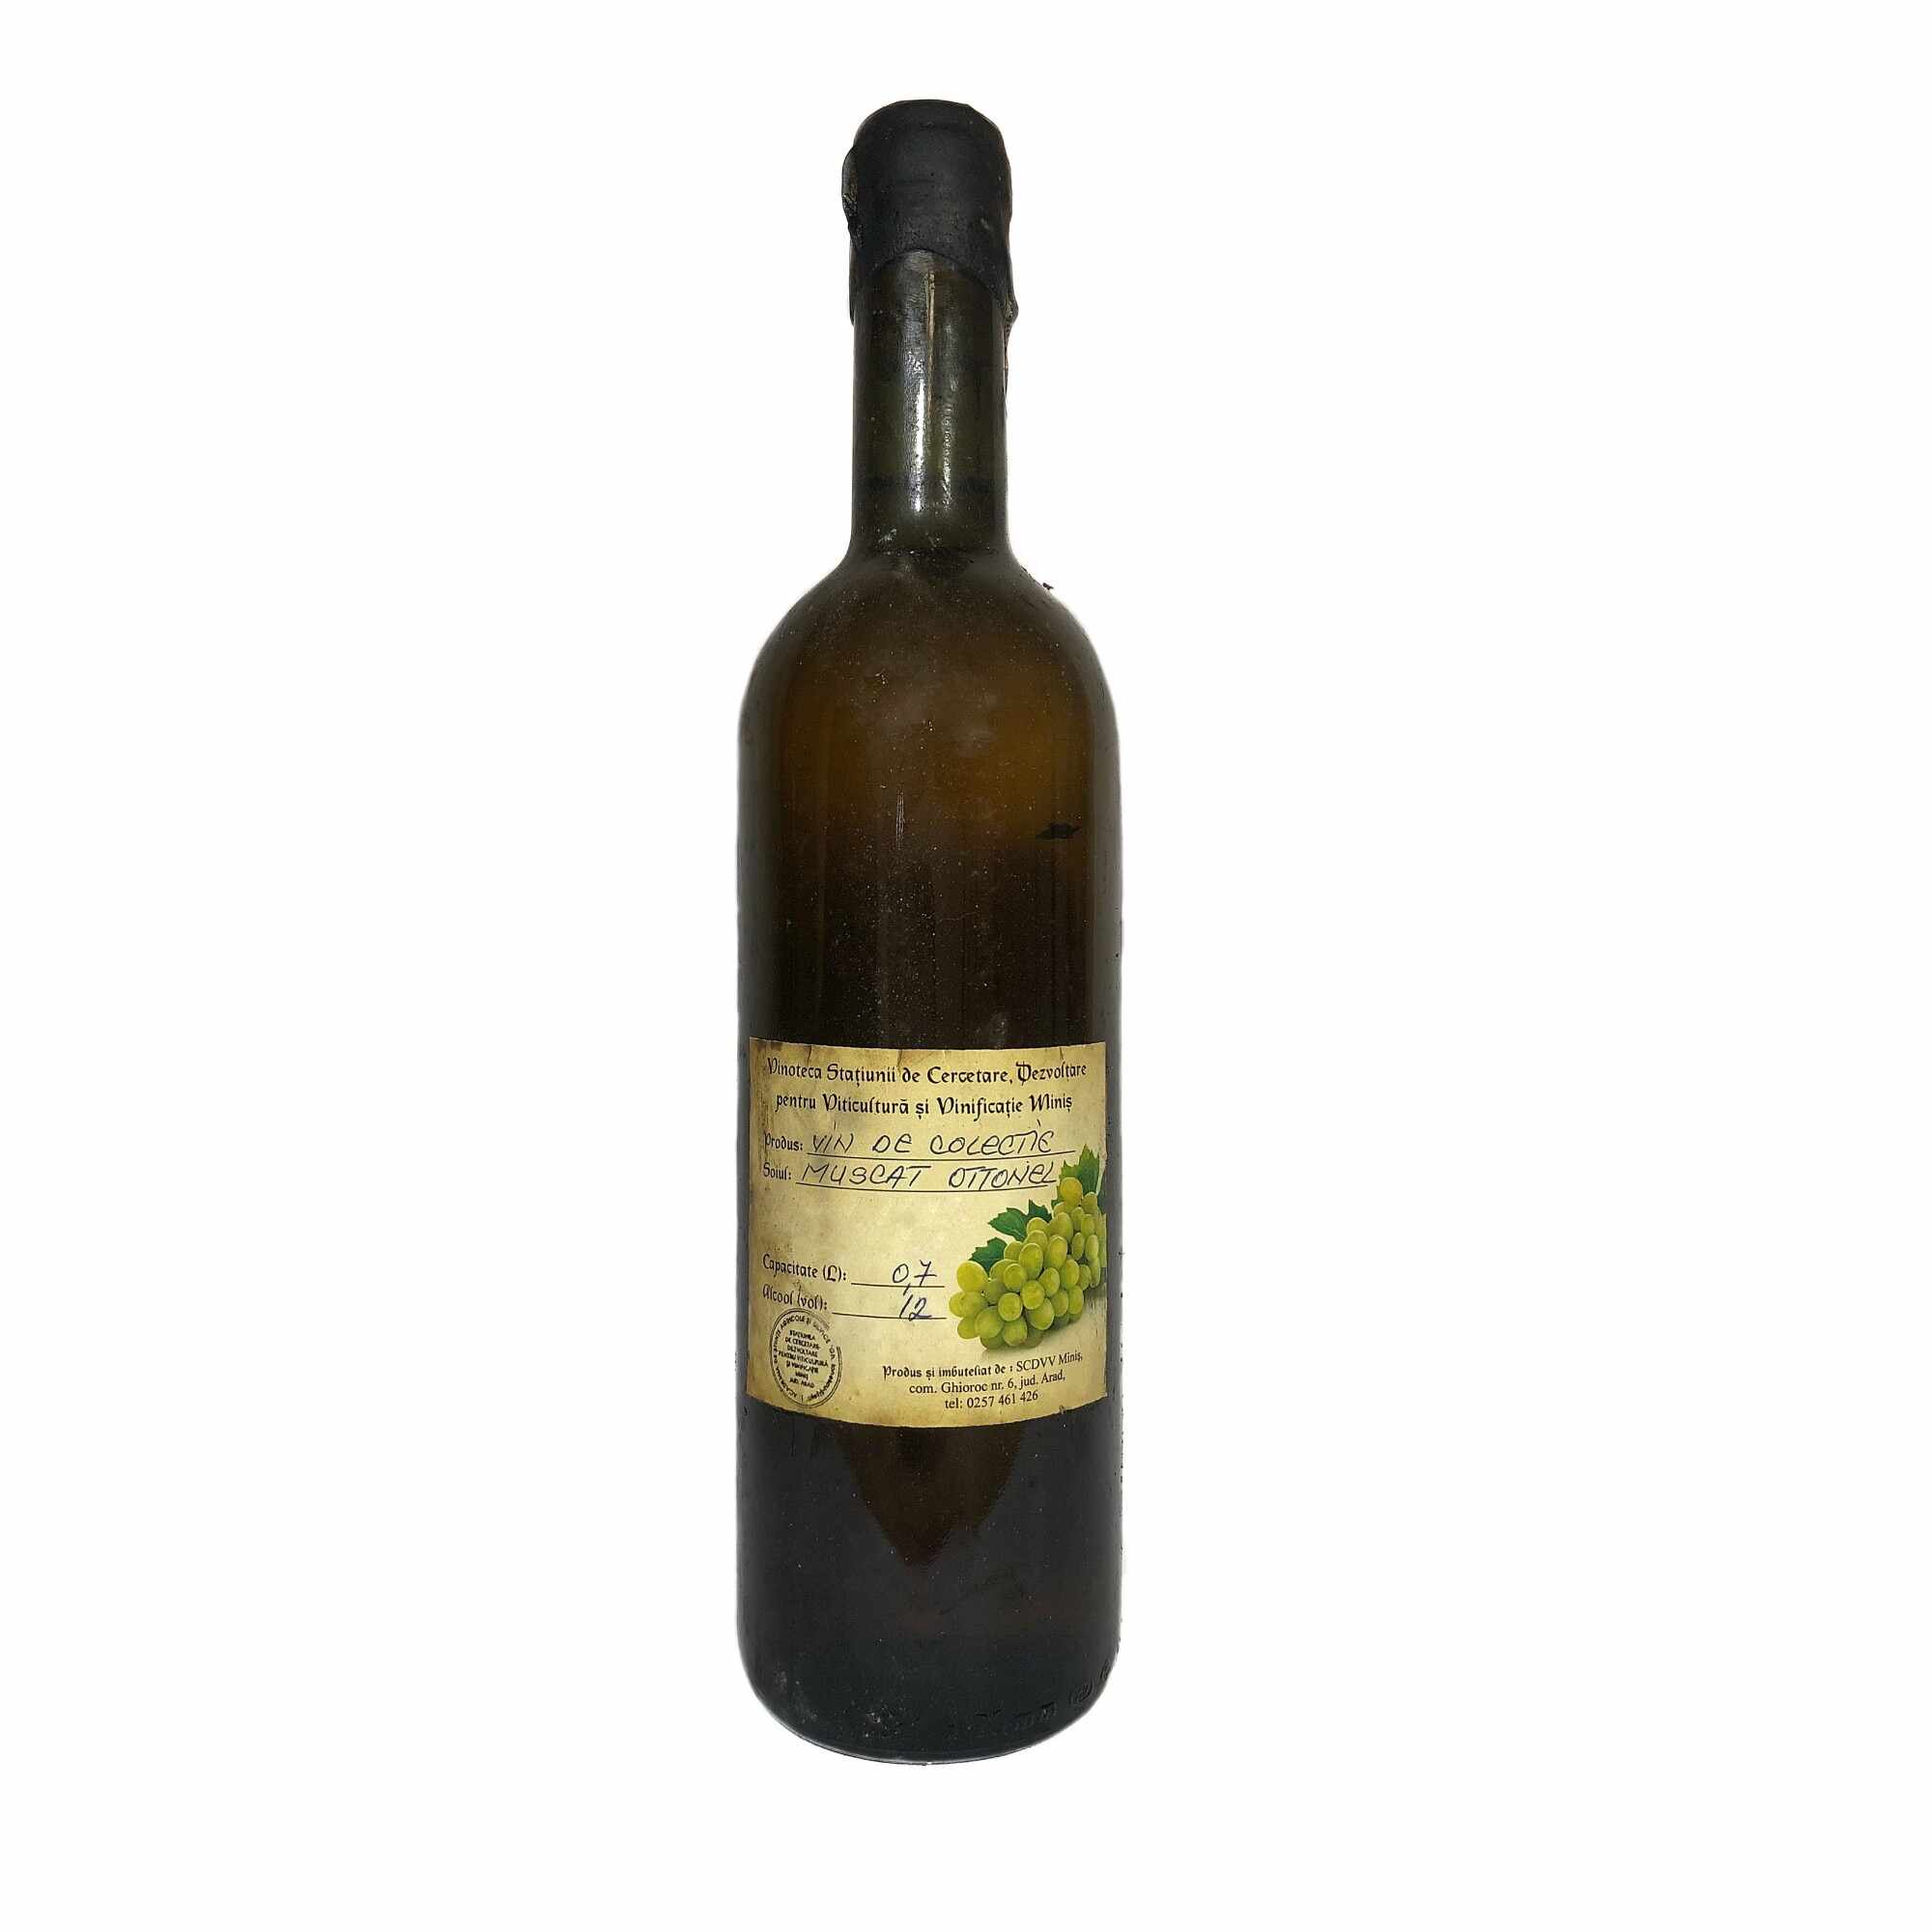 Vin alb de colectie Muscat Ottonel - Anul 1945 in cutie de lemn, 700 ml